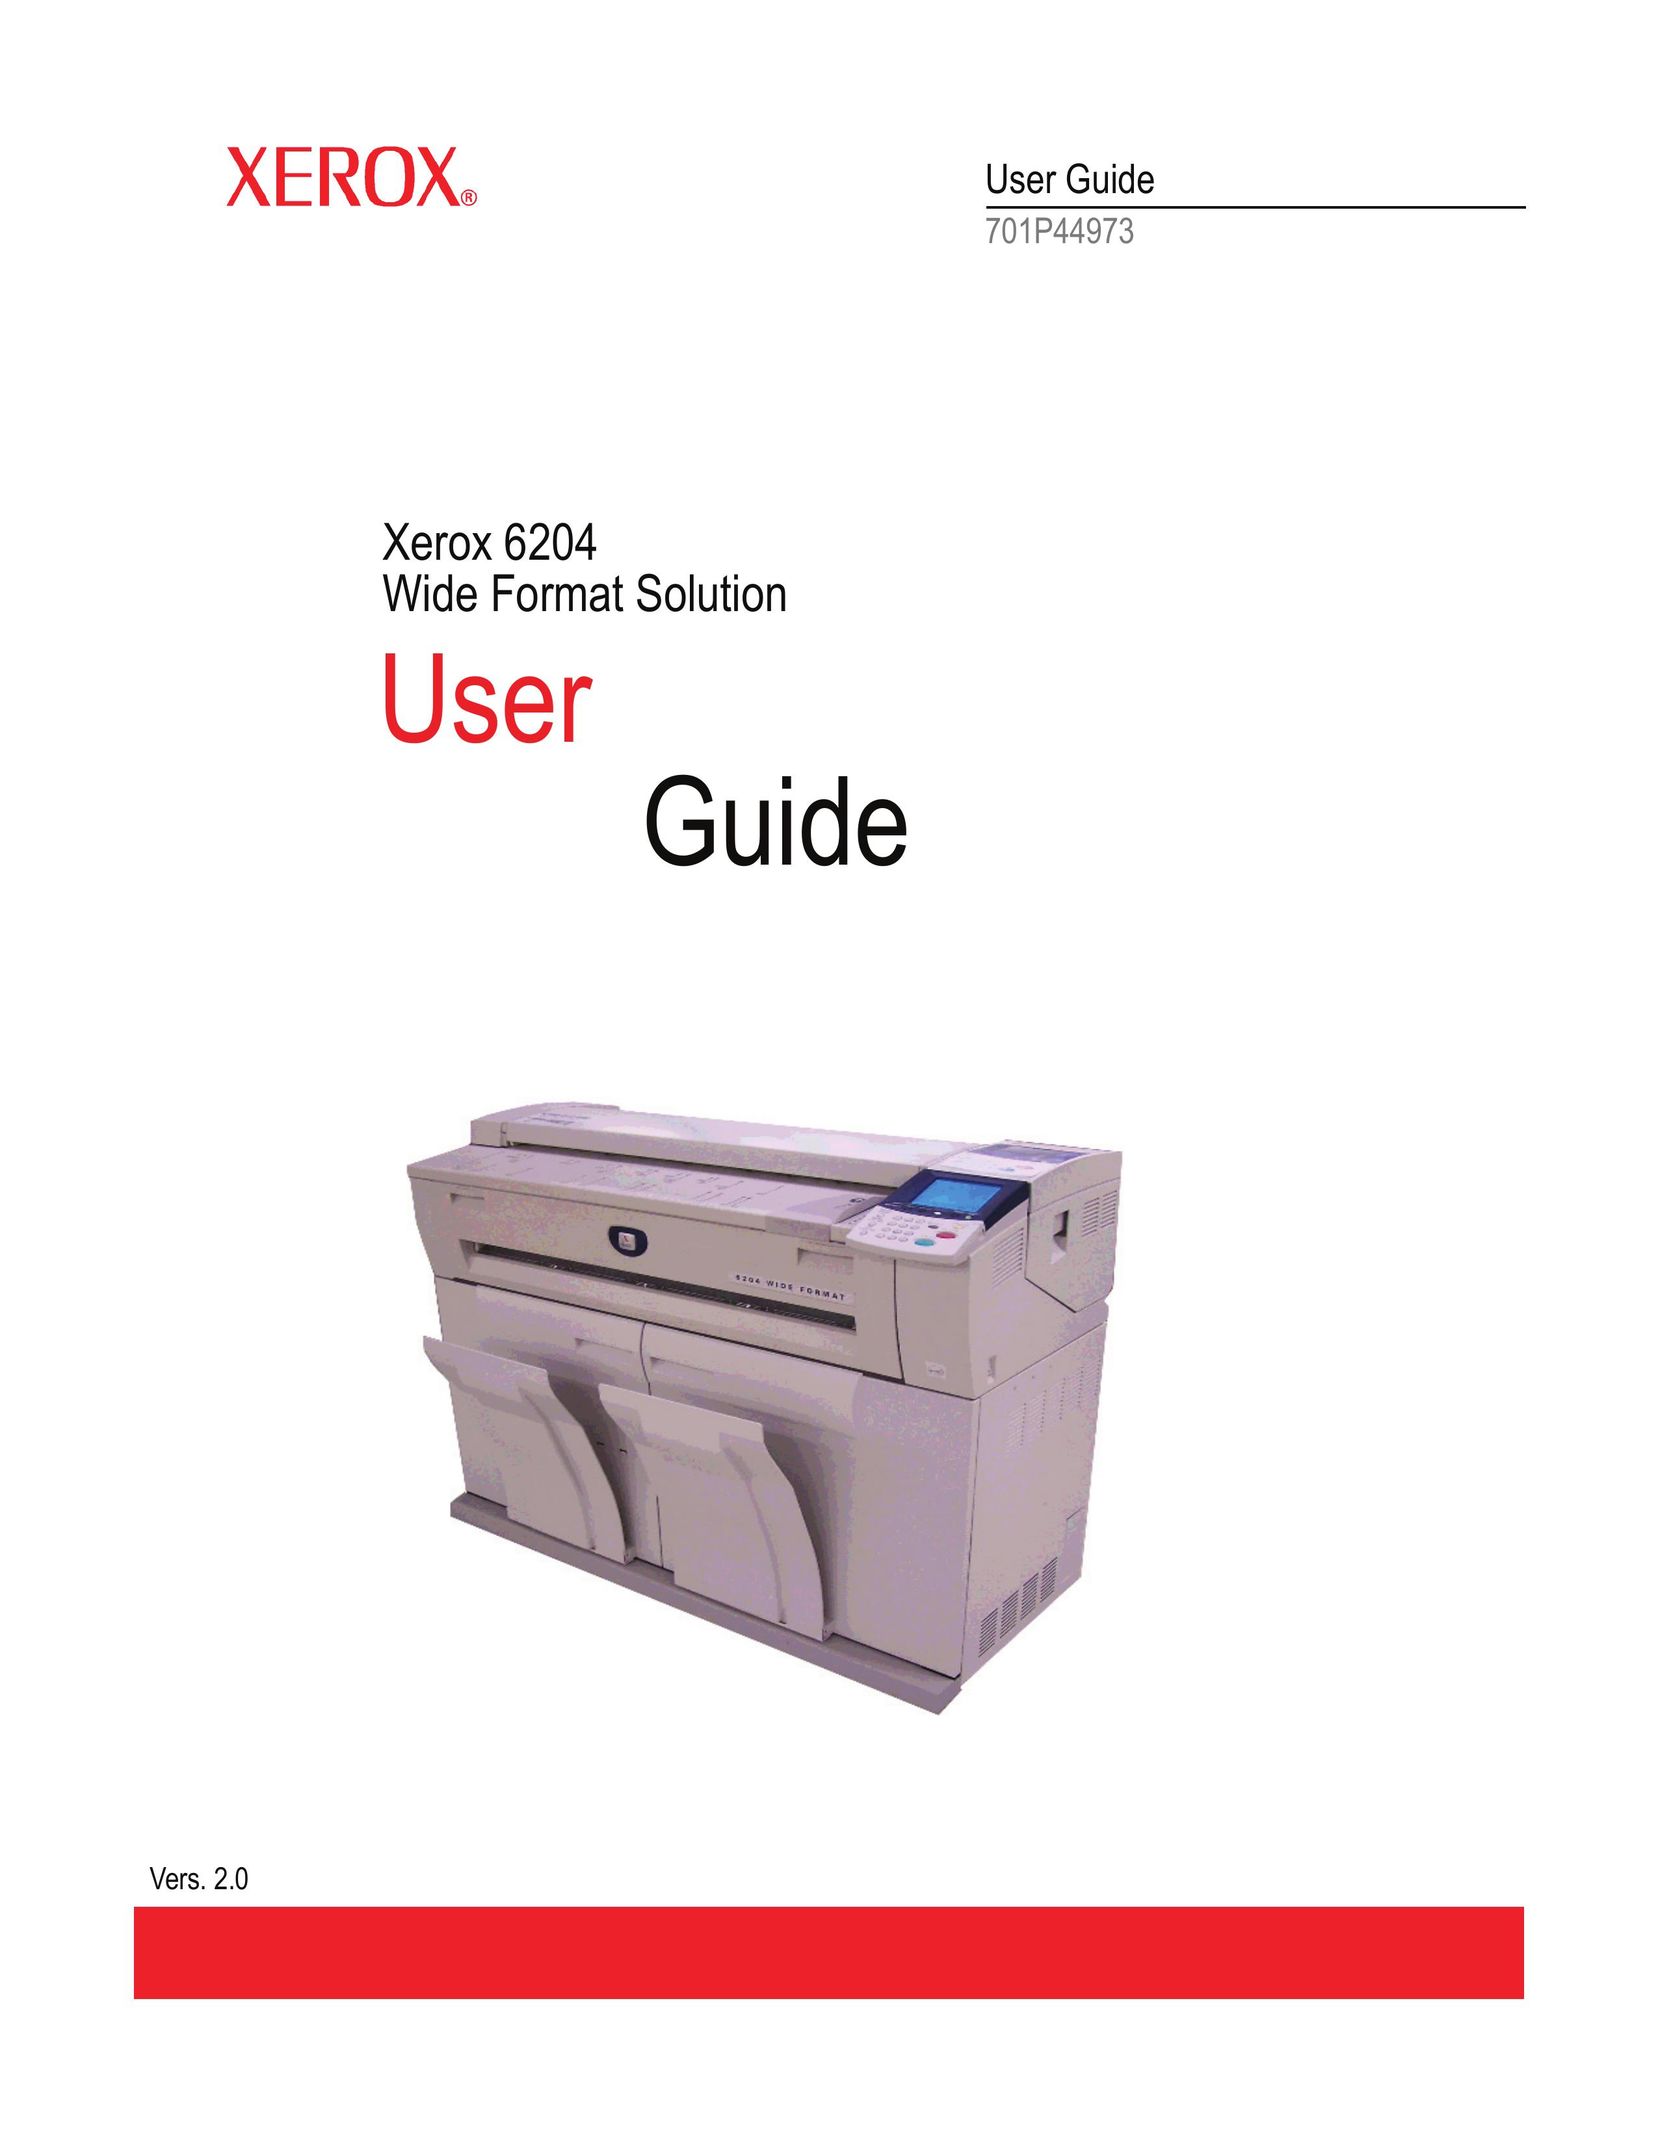 Xerox 701P44973 Copier User Manual